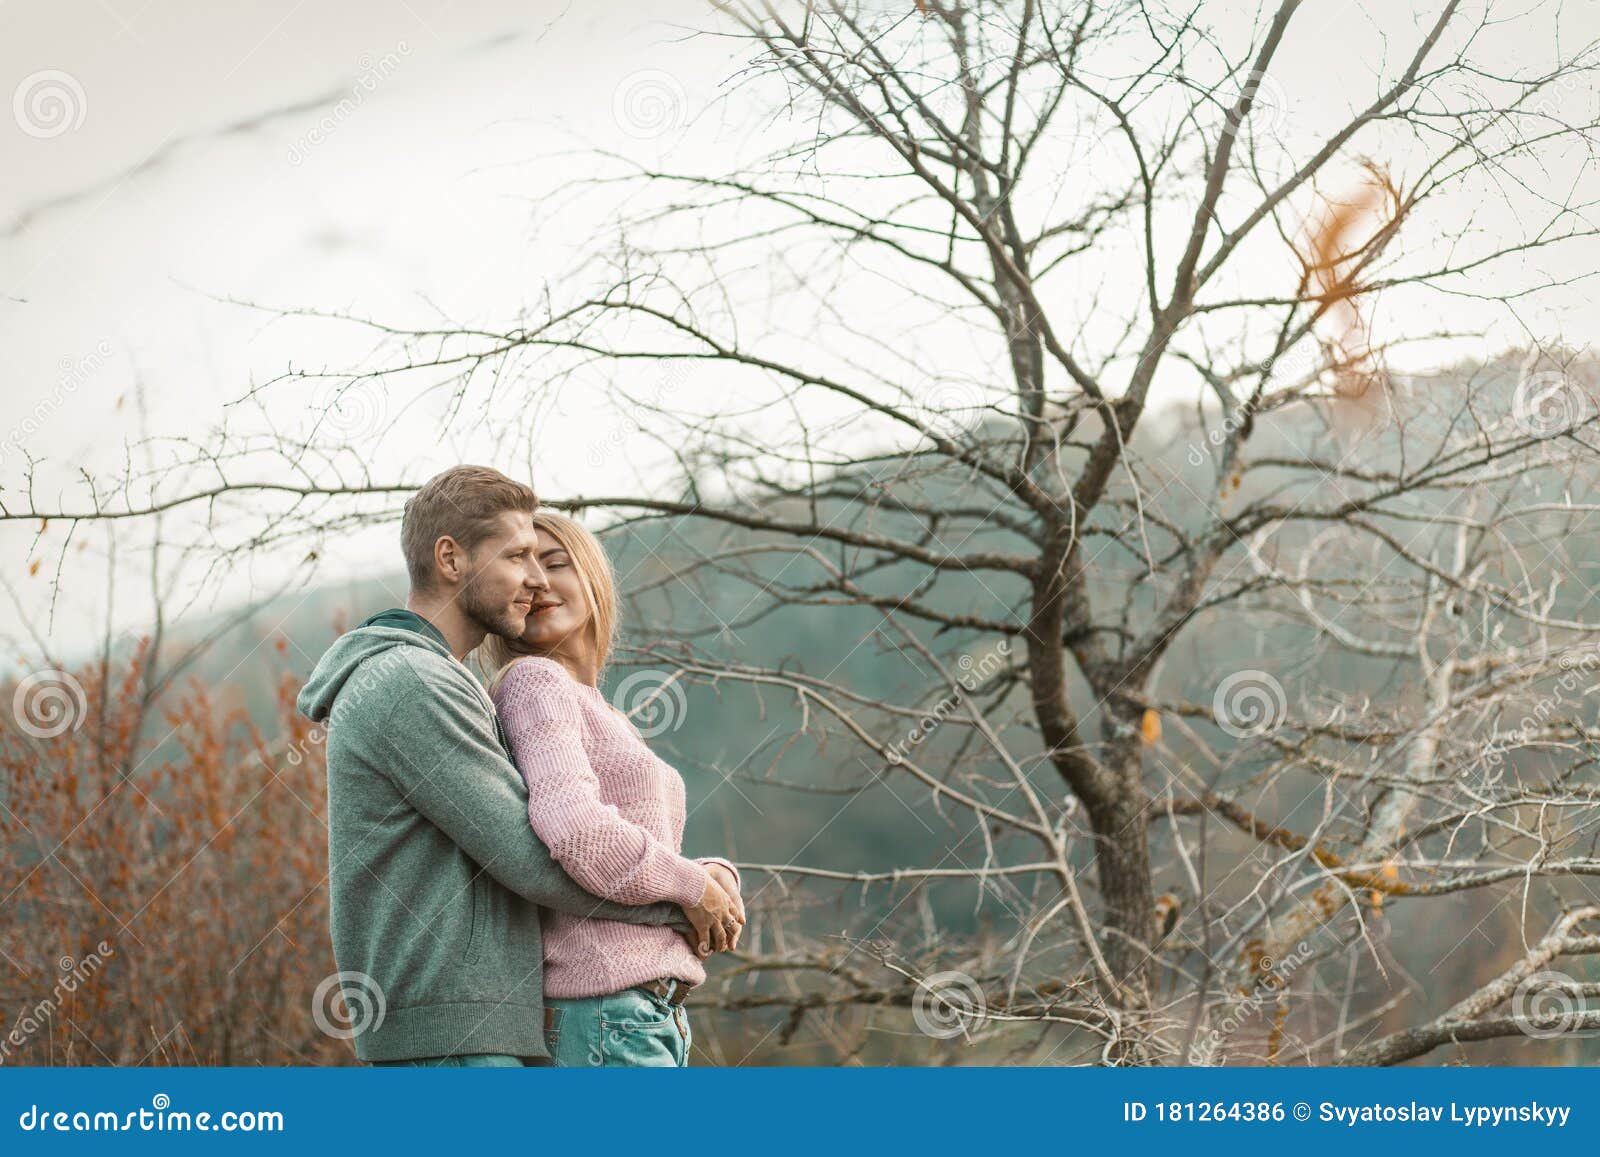 forvrængning Vanære Tidlig Couple in Love Stands Against Nature and Hugging Tenderly Stock Photo -  Image of bonding, smiling: 181264386